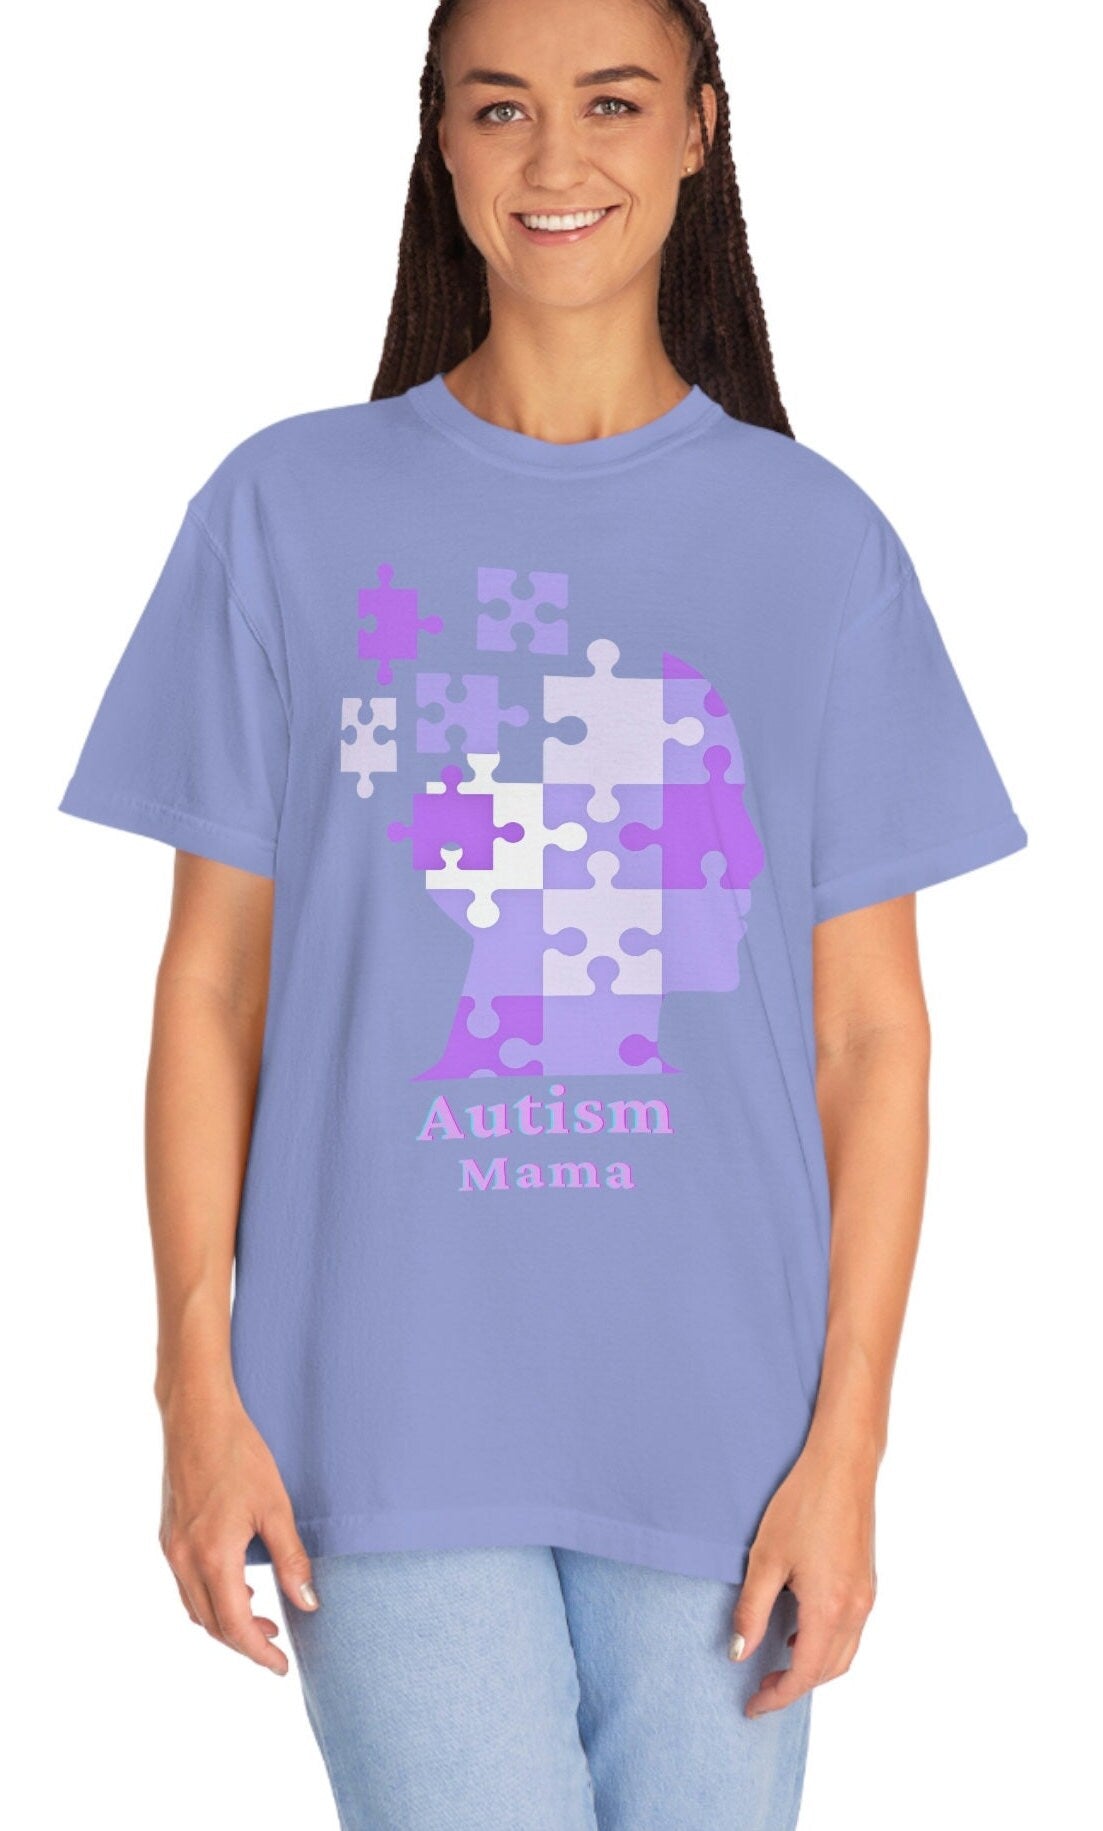 Comfort Colors Autism Mom Shirt, Autism Awareness, Autism Mother, Autism Mom Gift, Autism Acceptance, Autism Support Shirt